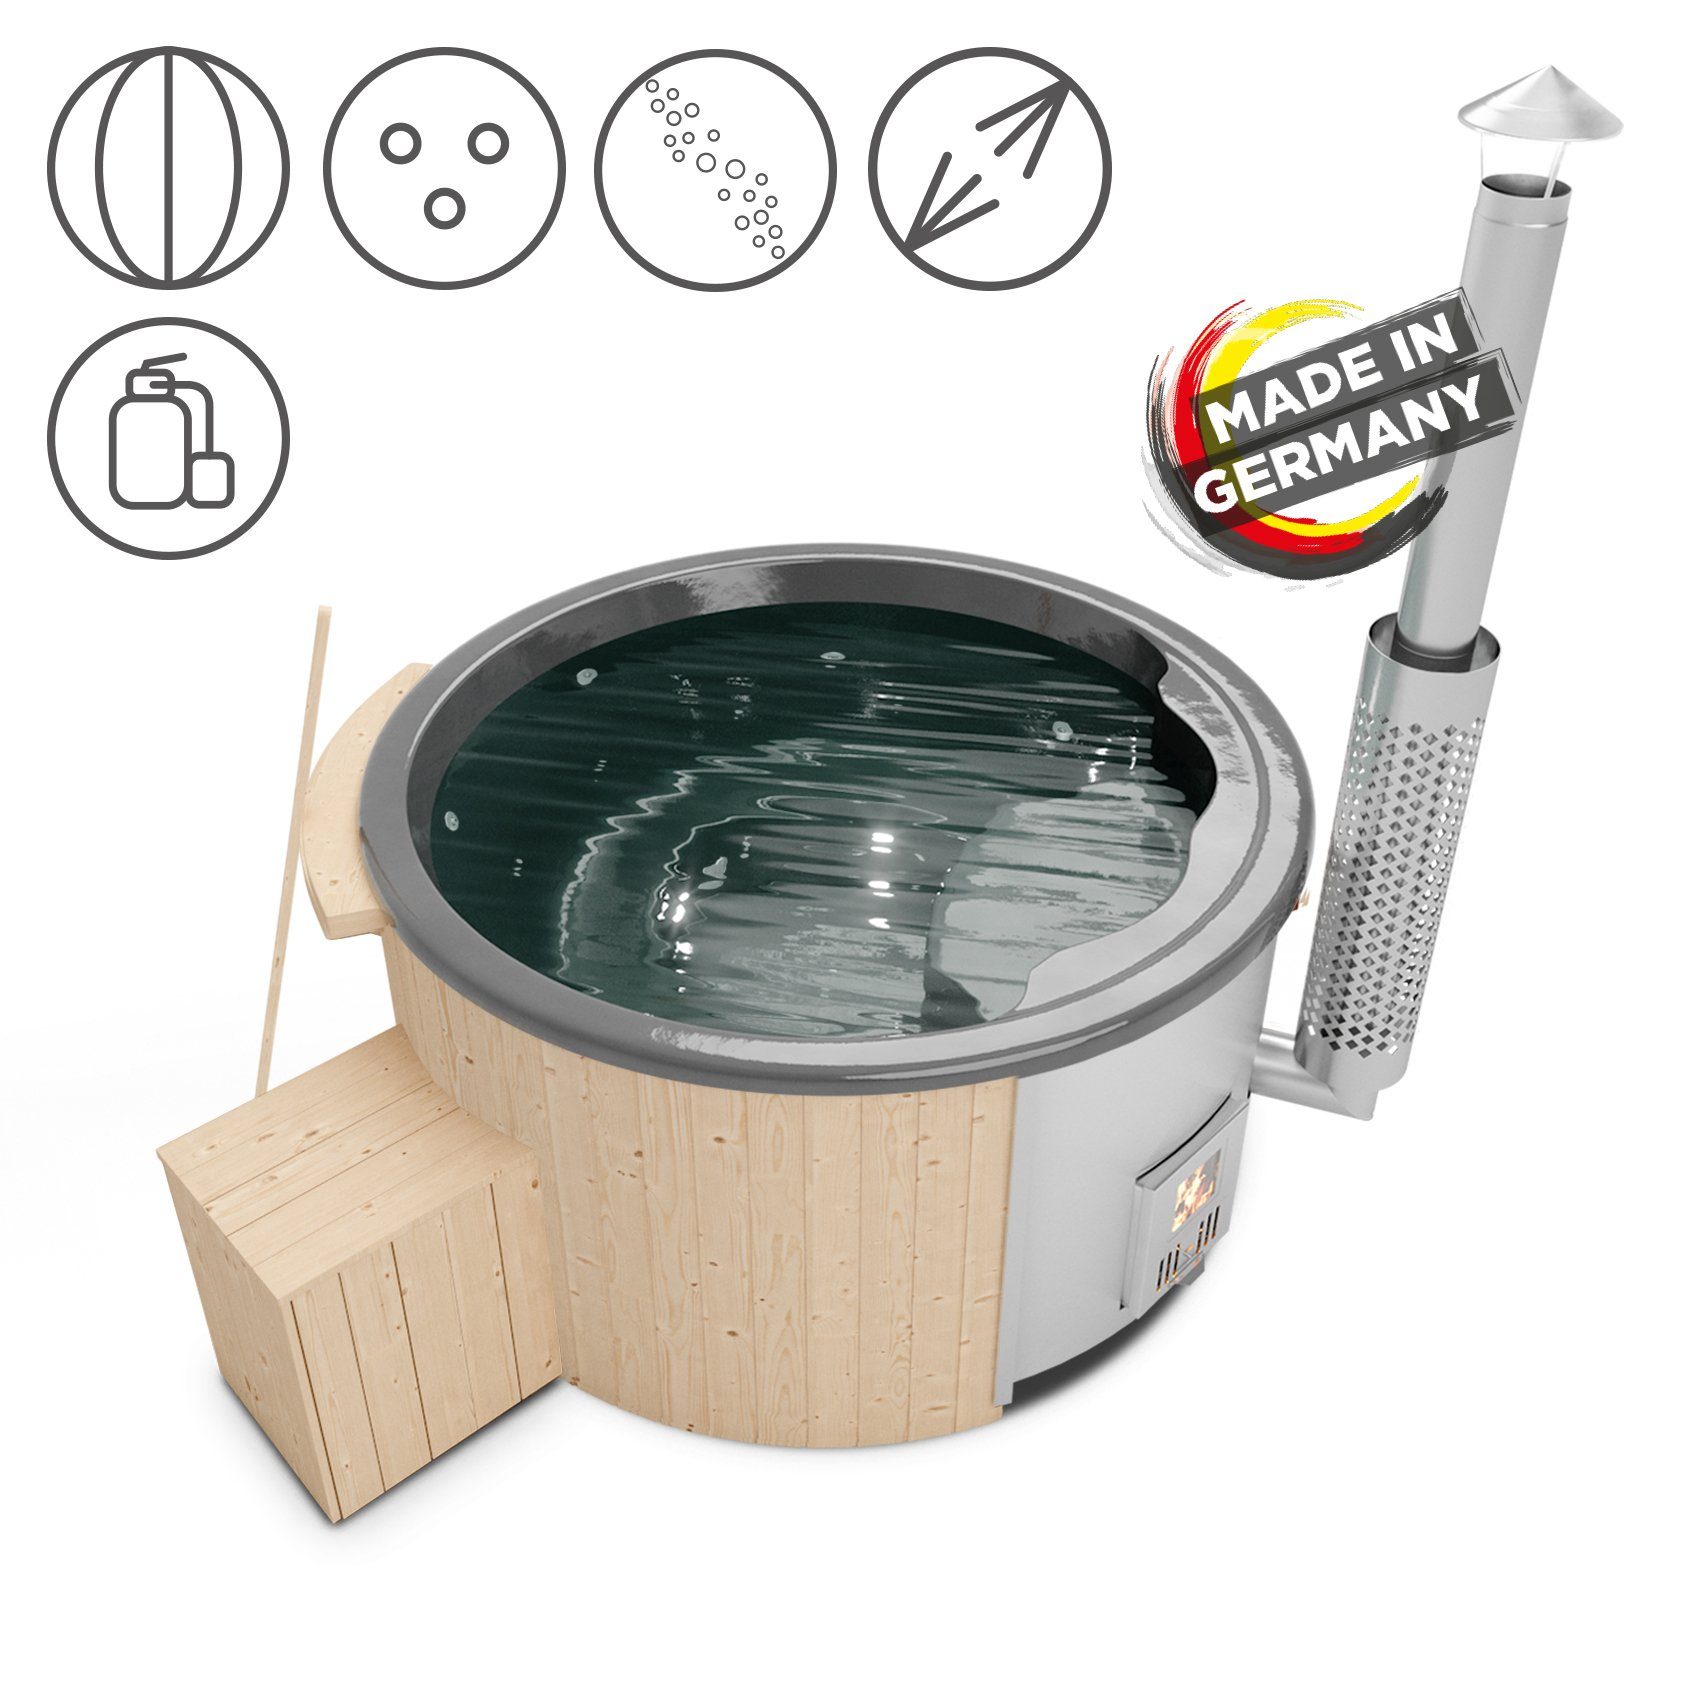 Holzklusiv Whirlpool-Badewanne Hot Tub Spa Deluxe Clean